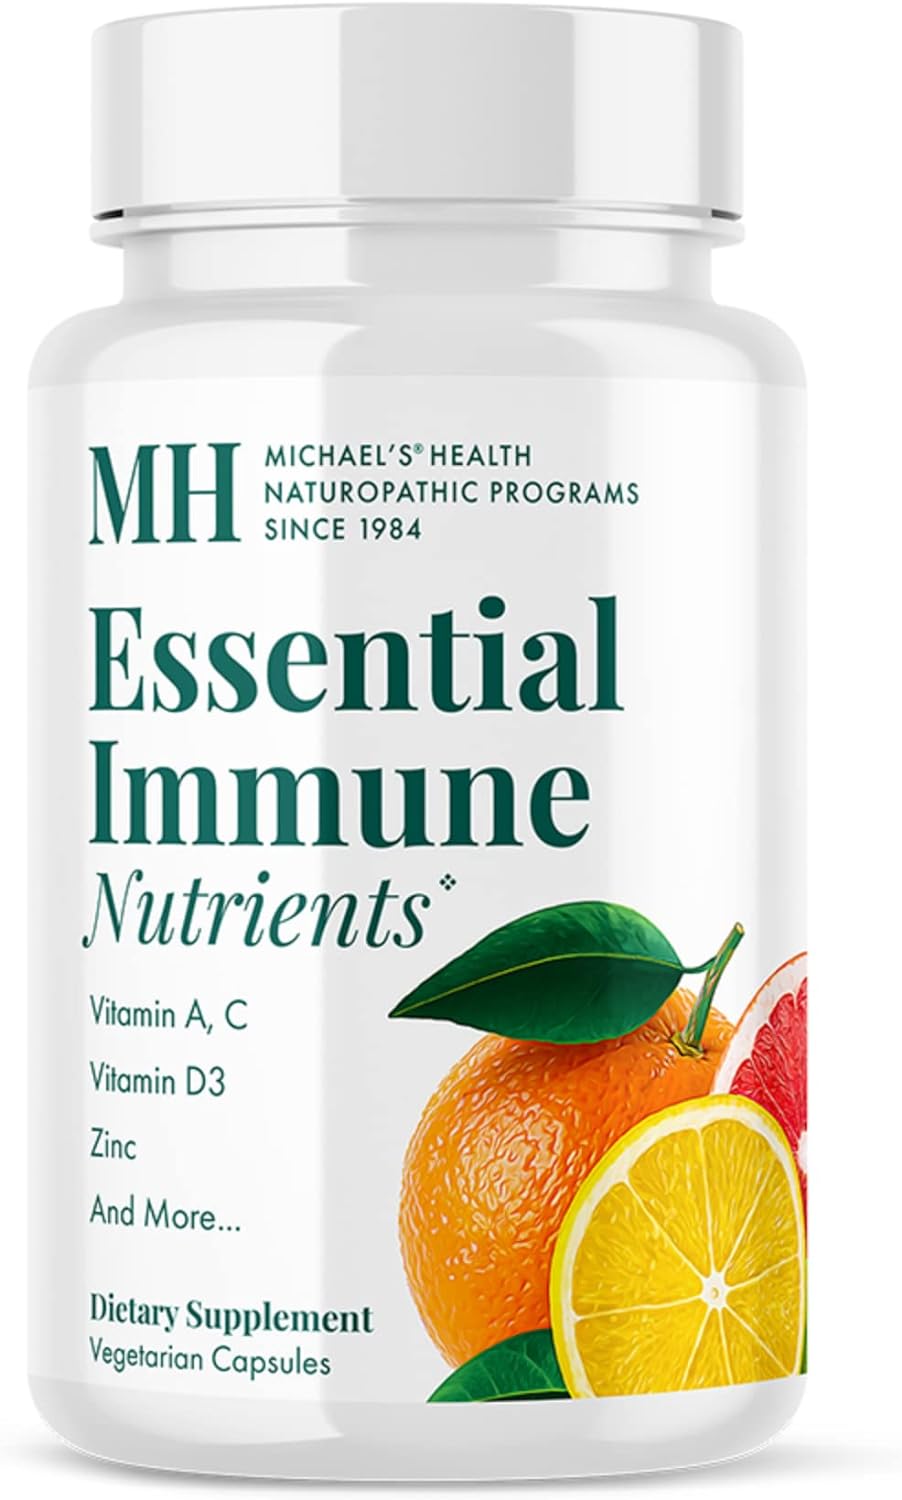 MICHAEL'S Health Naturopathic Programs Essential Immune Nutrients - 60